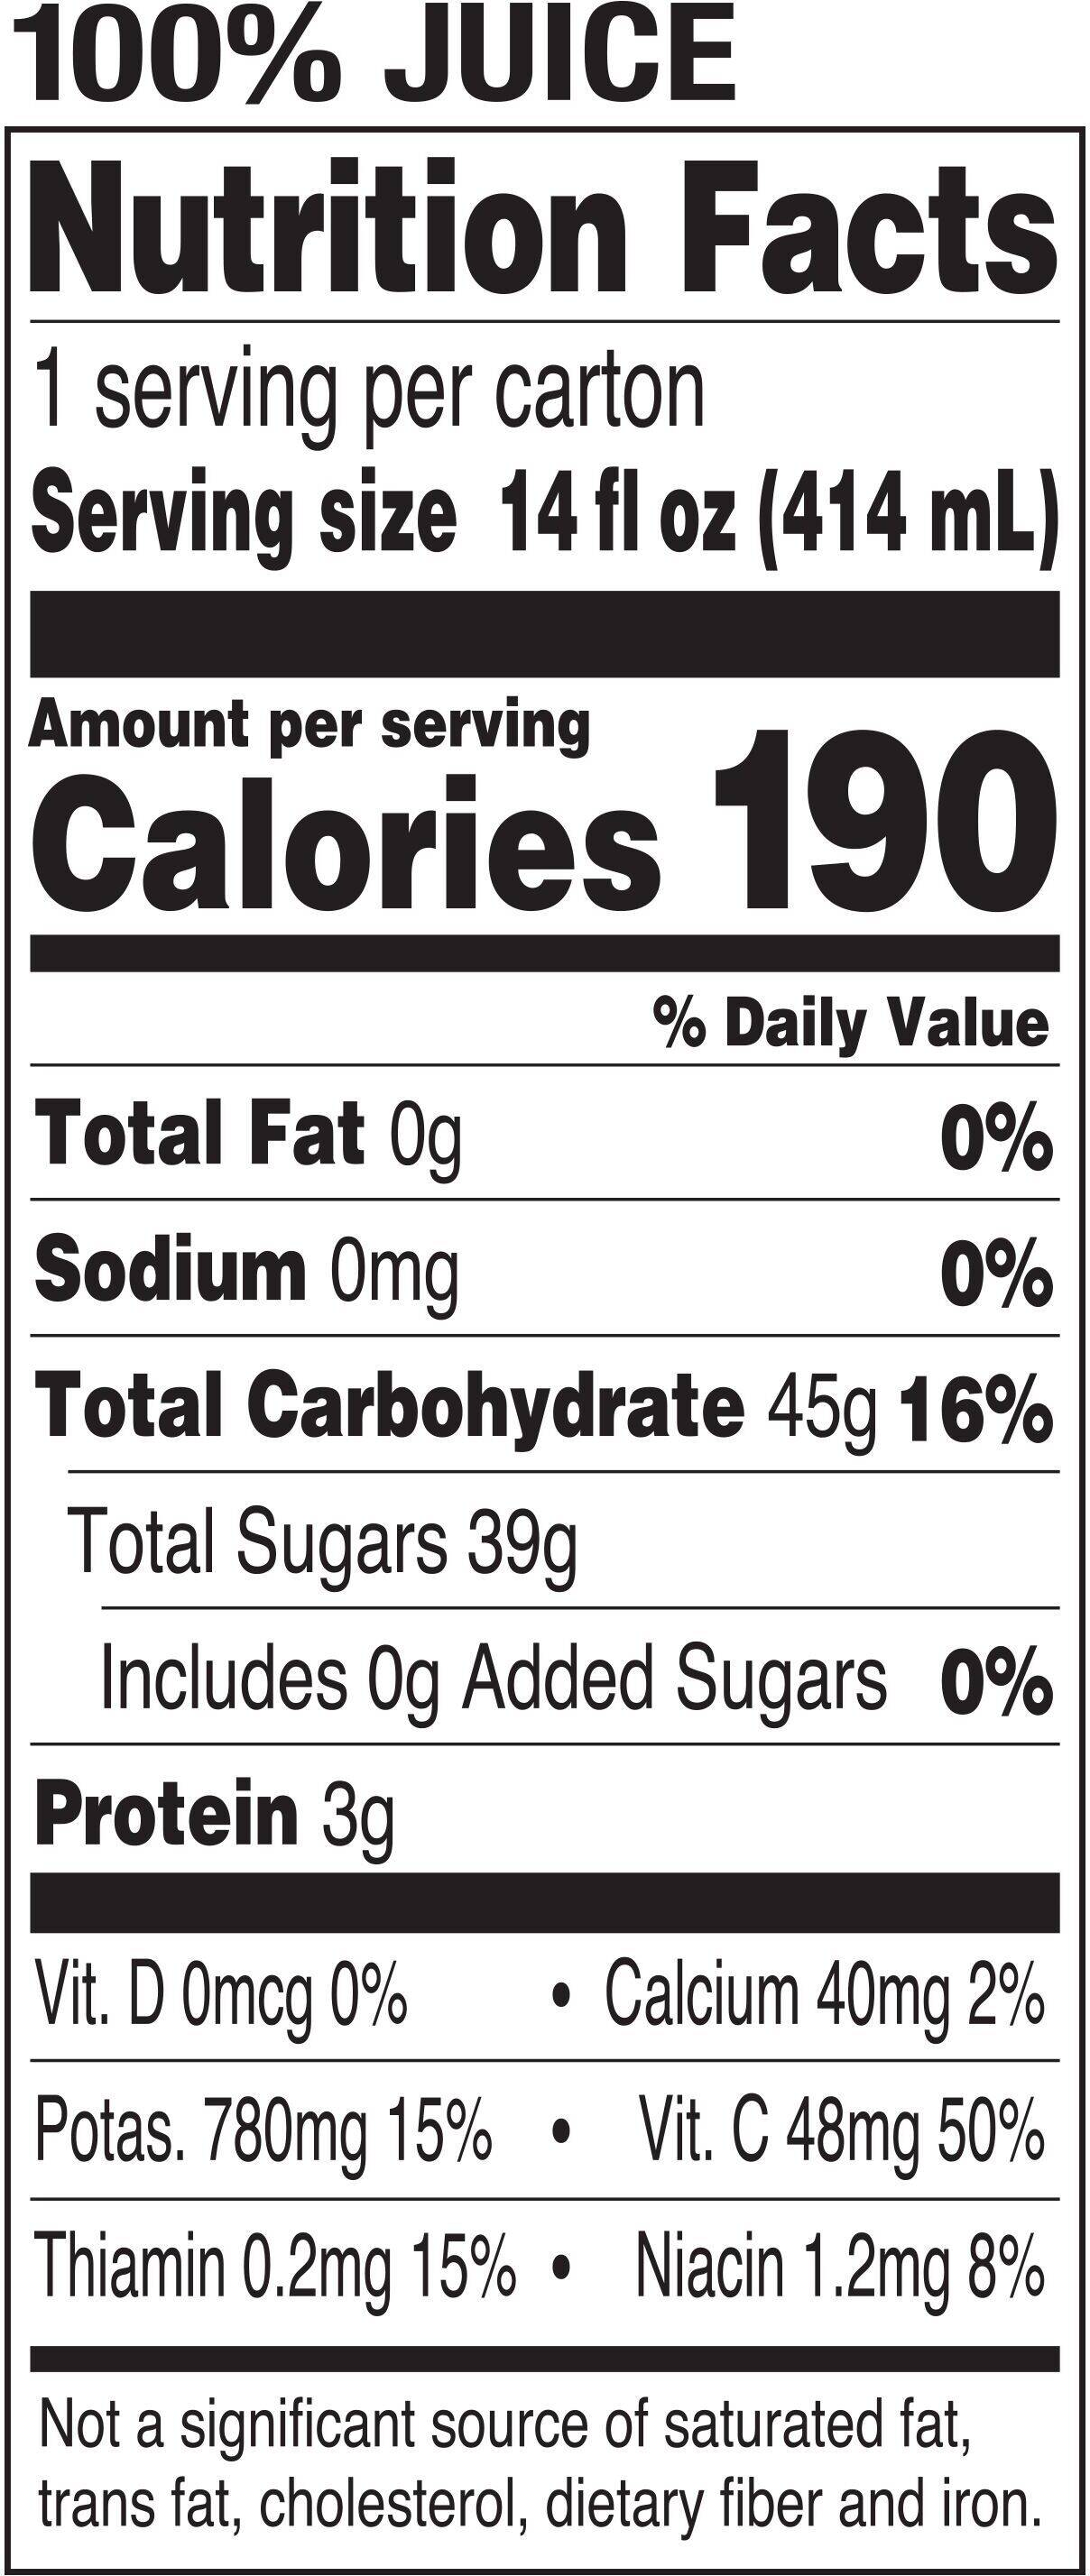 Image describing nutrition information for product Tropicana Pure Premium Original Orange Juice